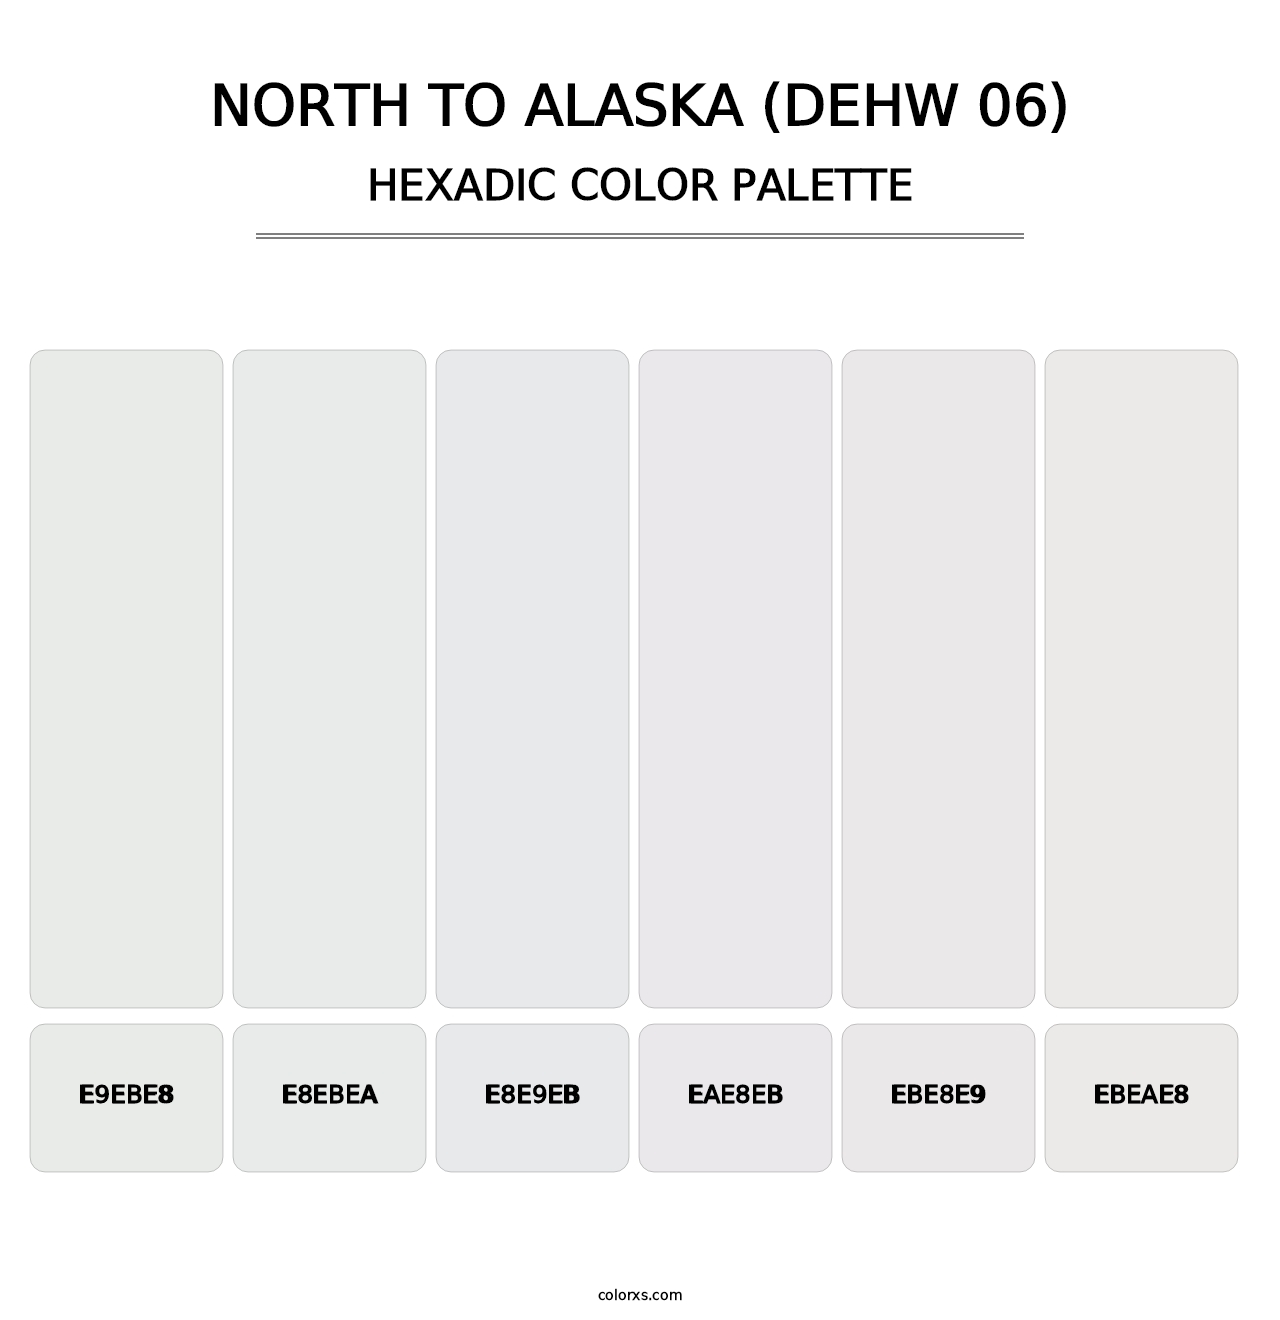 North To Alaska (DEHW 06) - Hexadic Color Palette